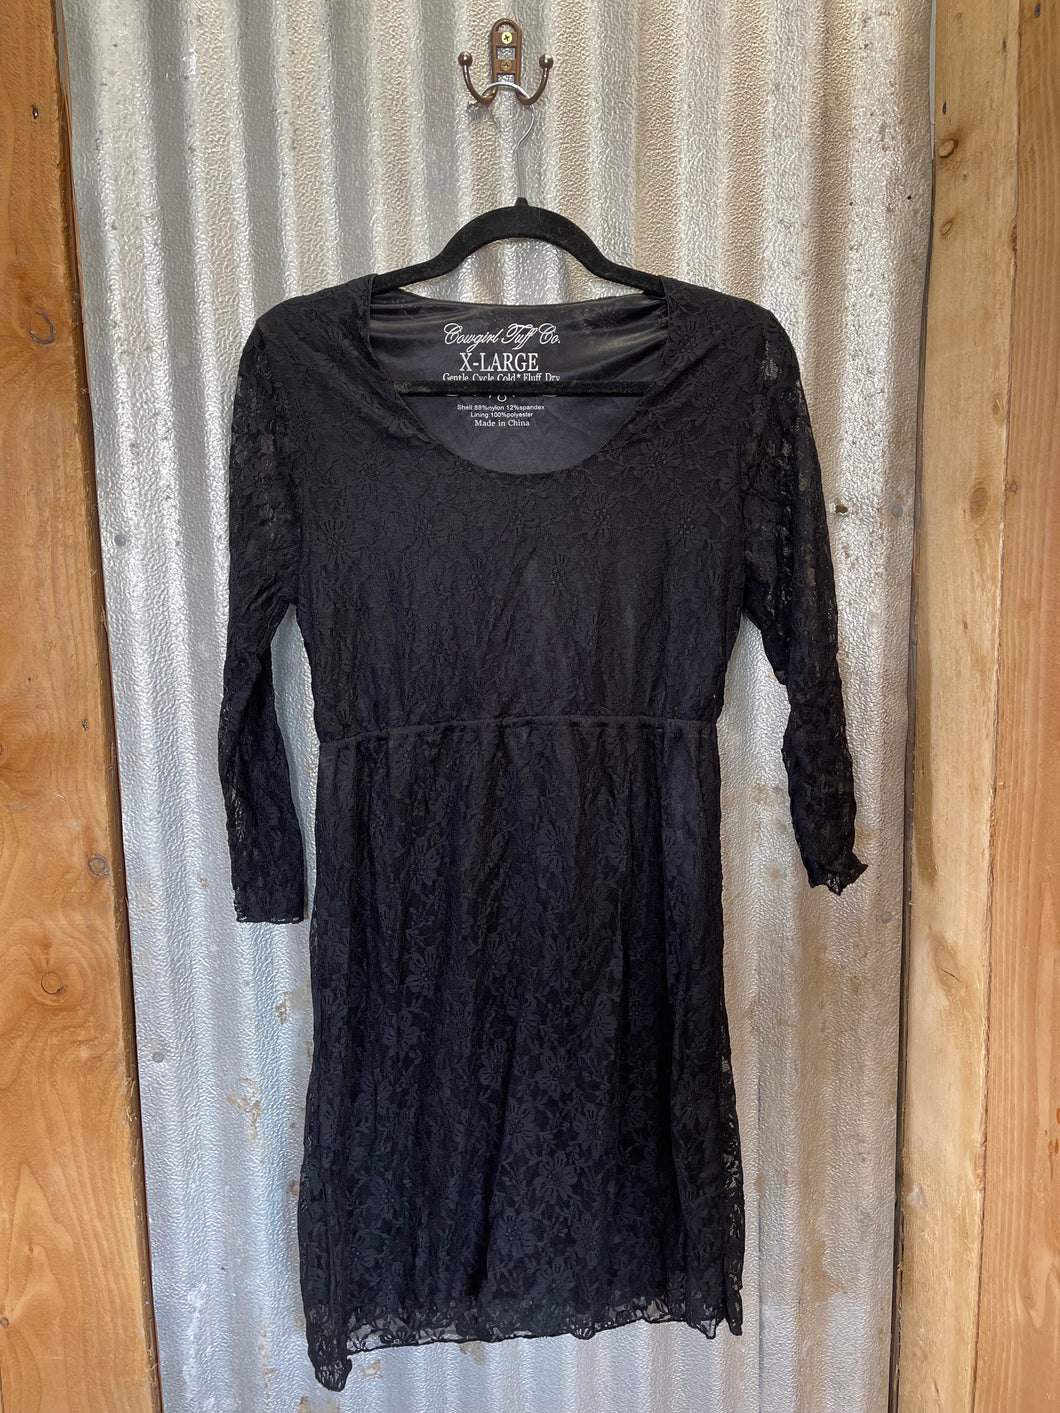 SMALL: NWOT Black Lace Dress